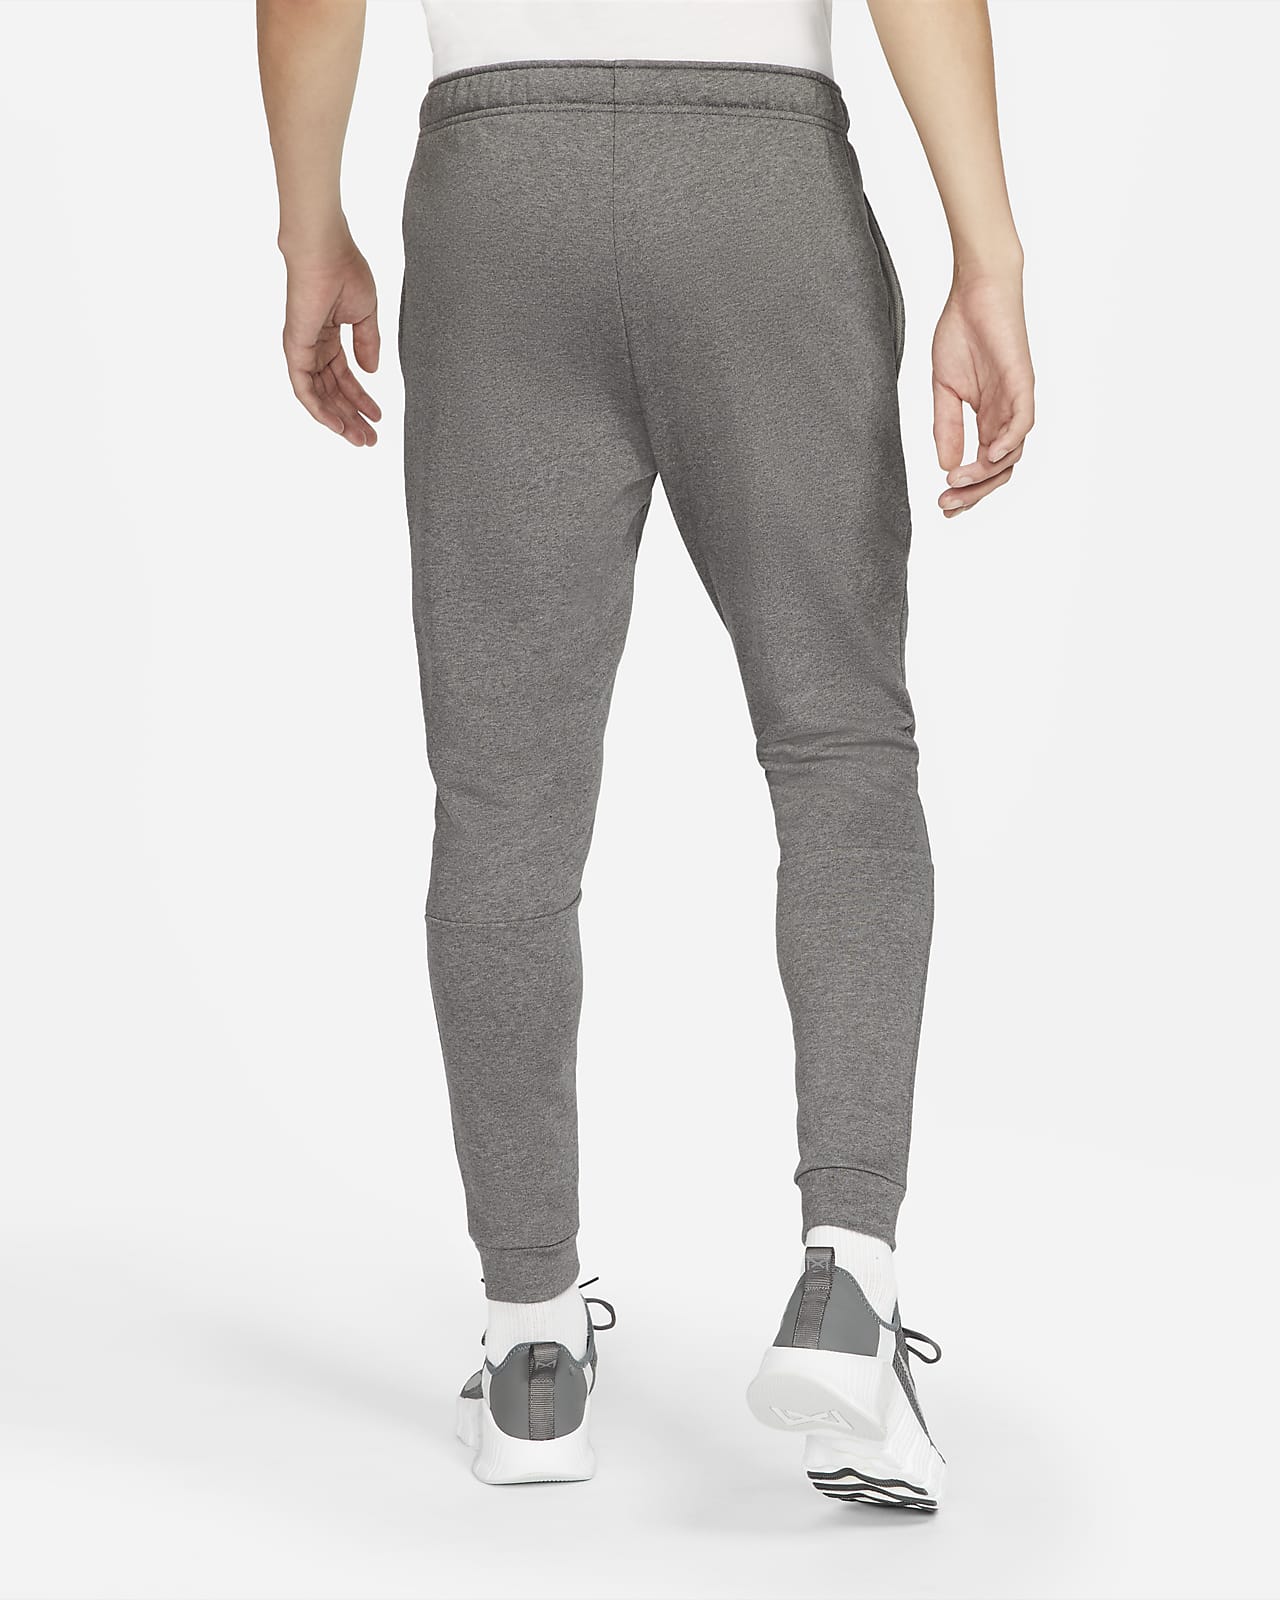 Nike Dry Men's Dri-FIT Taper Fitness Fleece Pants